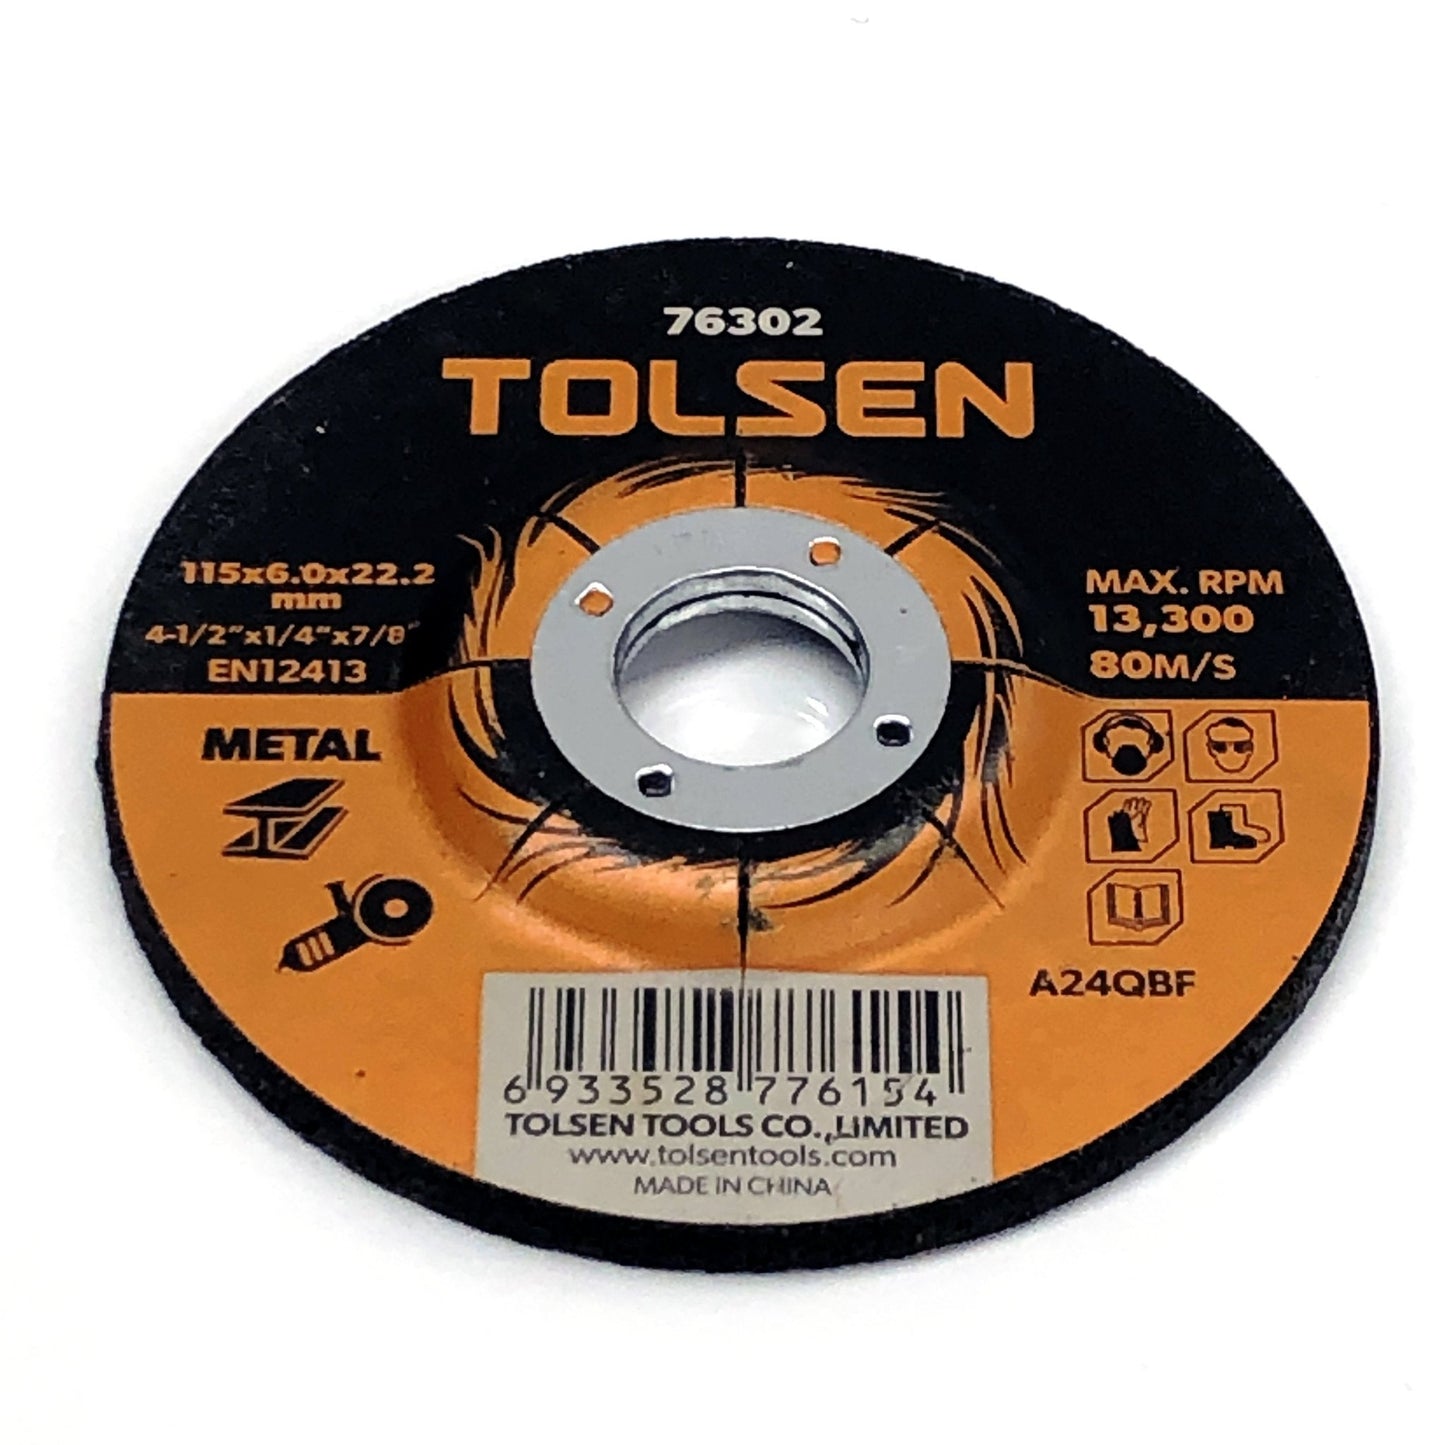 Tolsen 4-1/2" x 1/4" x 7/8" Depressed Center Grinding Wheel (76302) - $5 Outlet